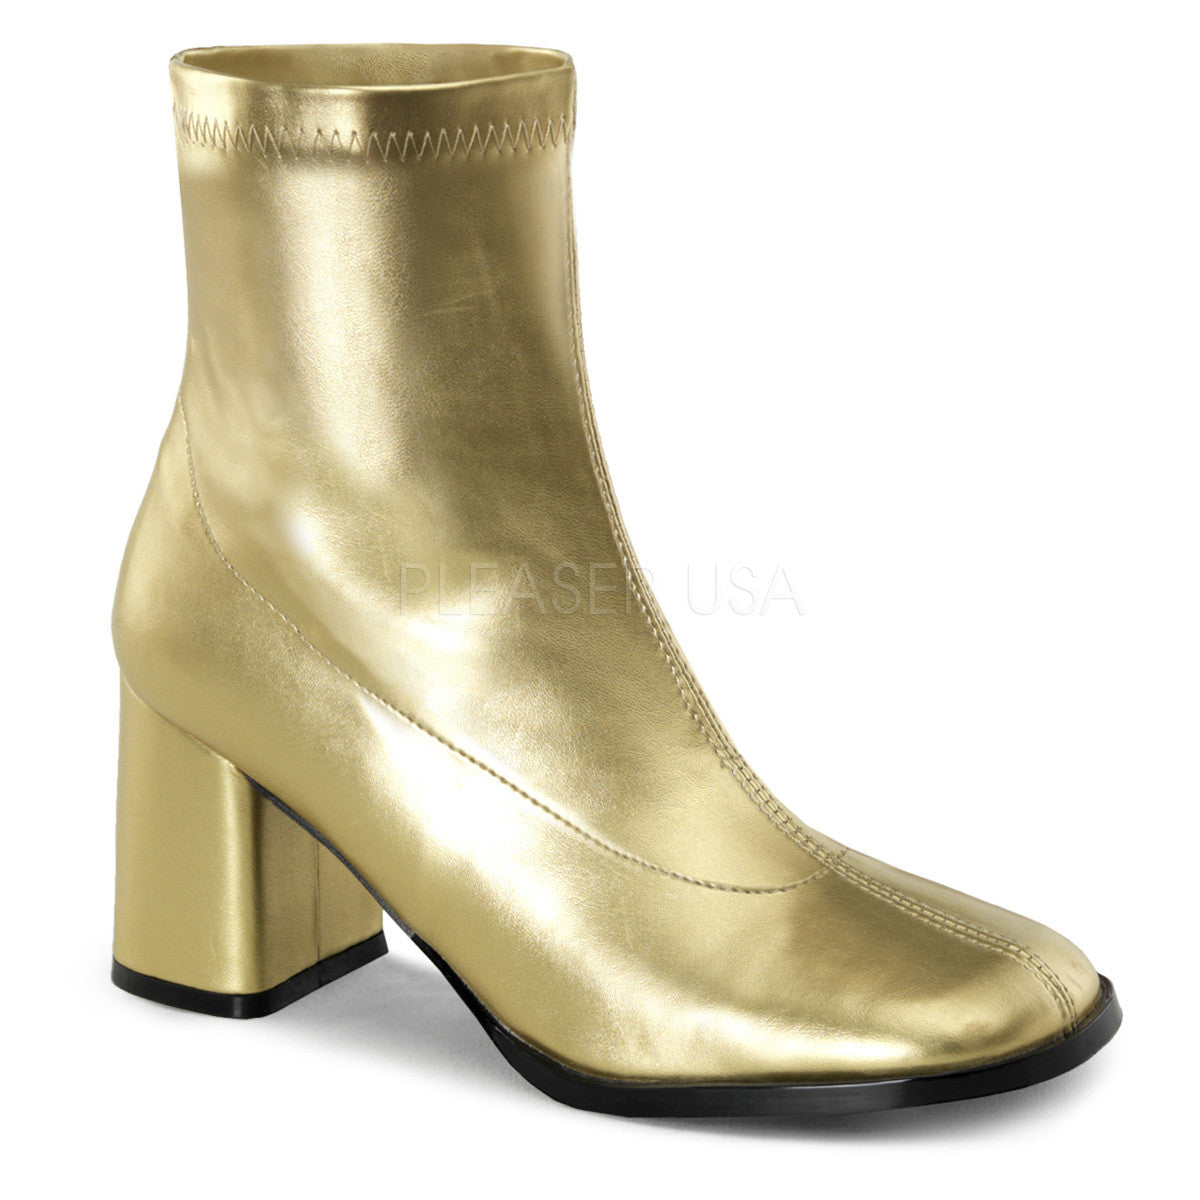 Funtasma GOGO-150 Gold Gogo Boots - Shoecup.com - 1